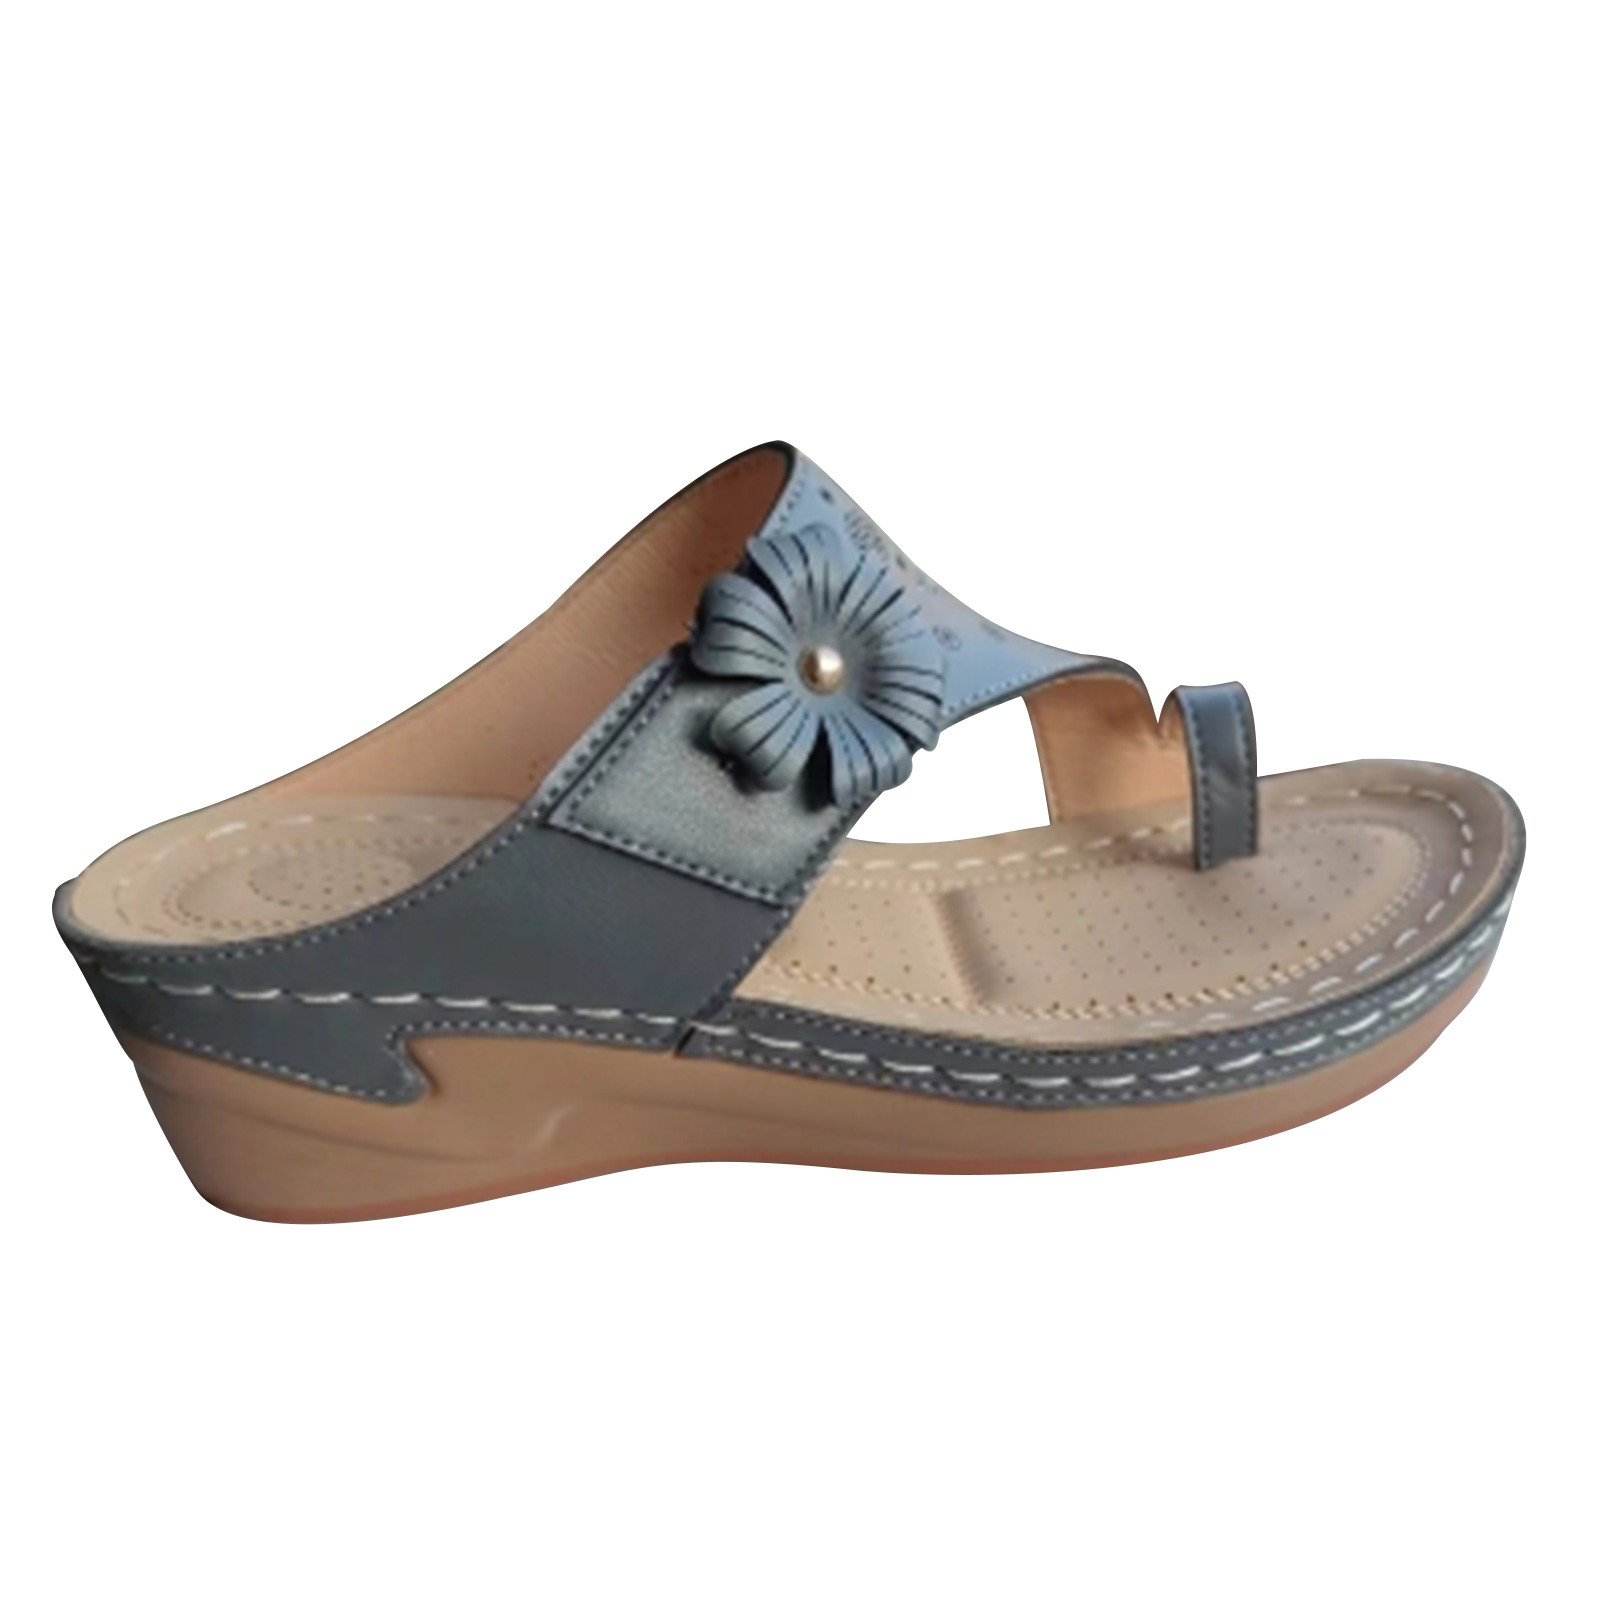 Slide Sandals Flip Flops for Womens Comfor Orthopedic Wedge Sandal with ...